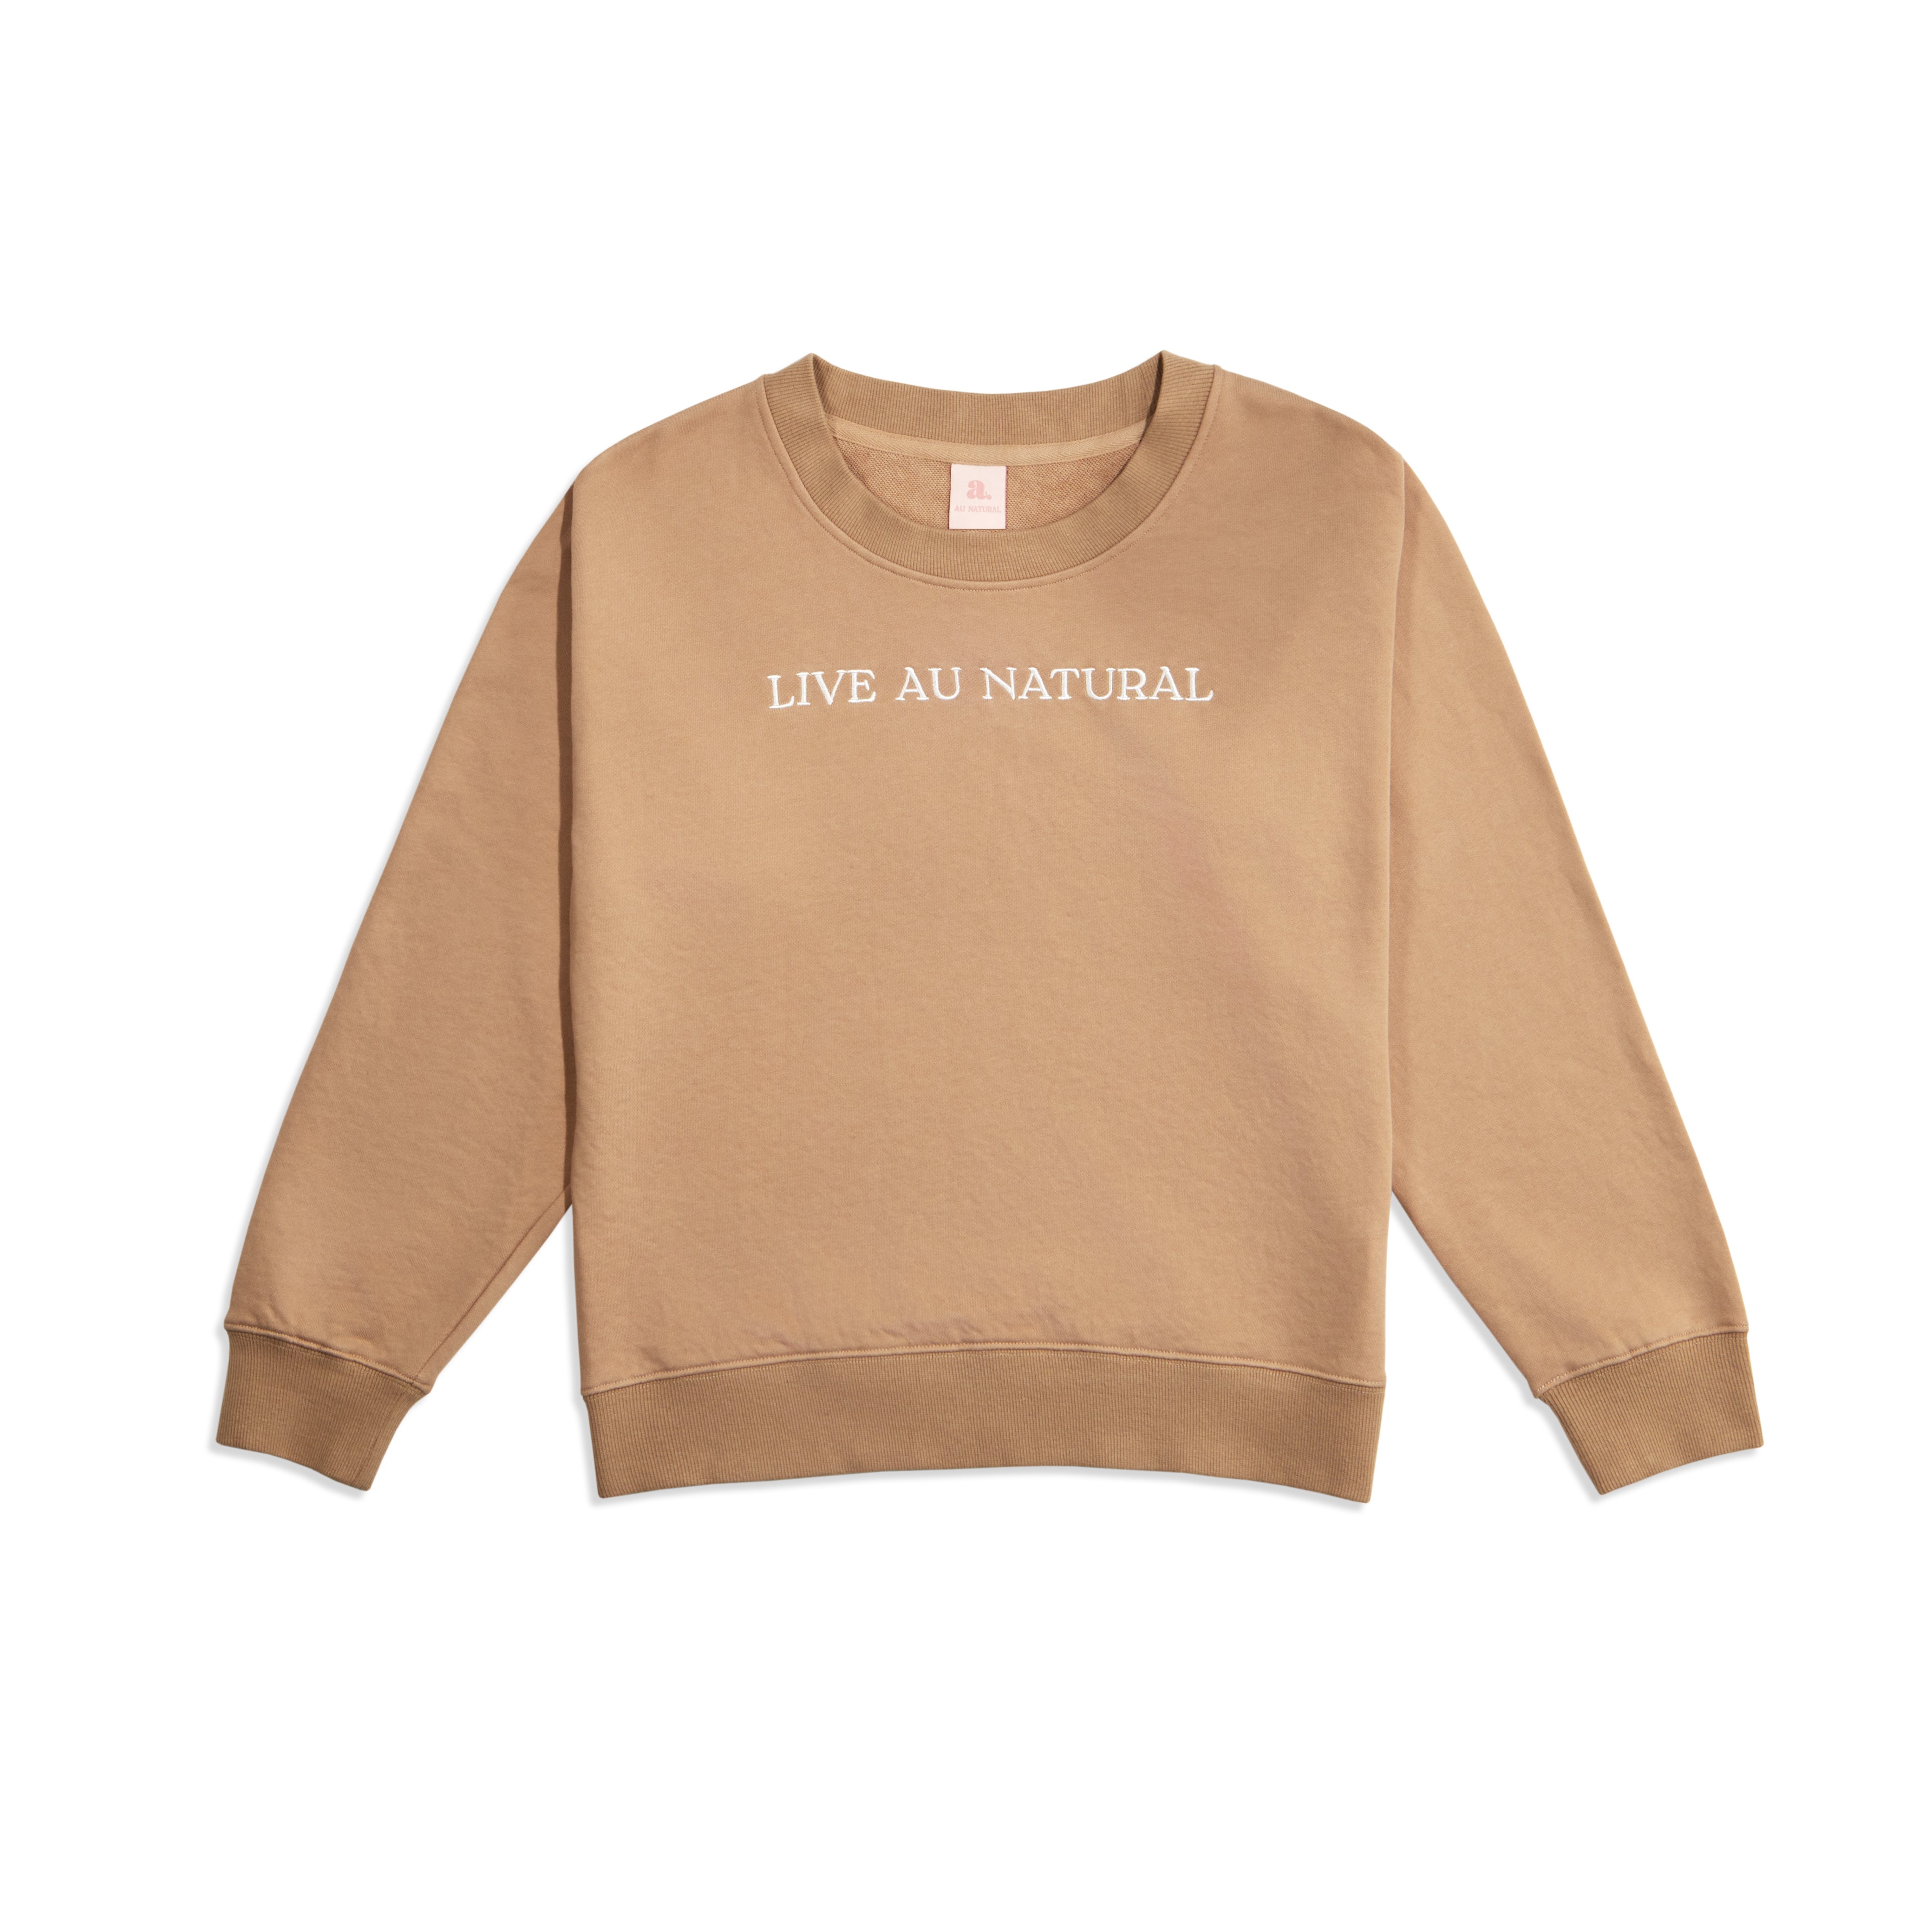 Live Au Natural Sweatshirt